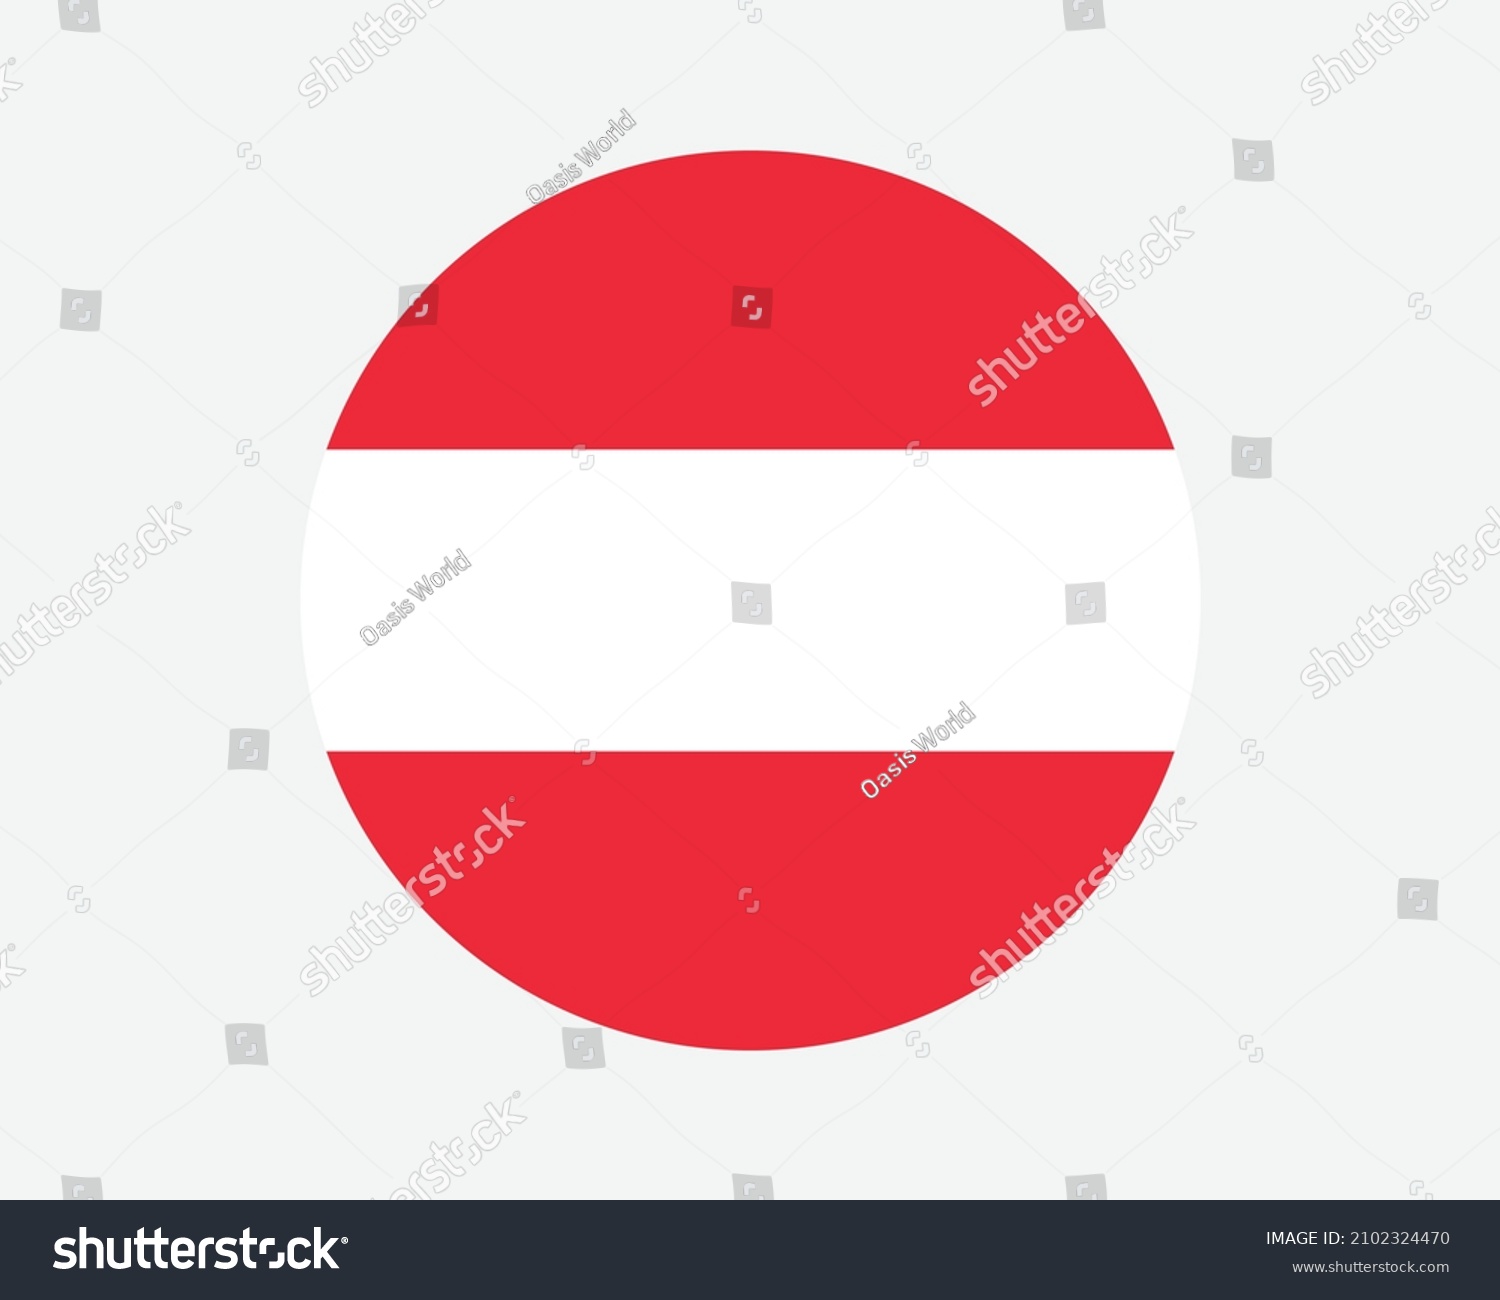 SVG of Austria Round Country Flag. Circular Austrian National Flag. Republic of Austria Circle Shape Button Banner. EPS Vector Illustration. svg